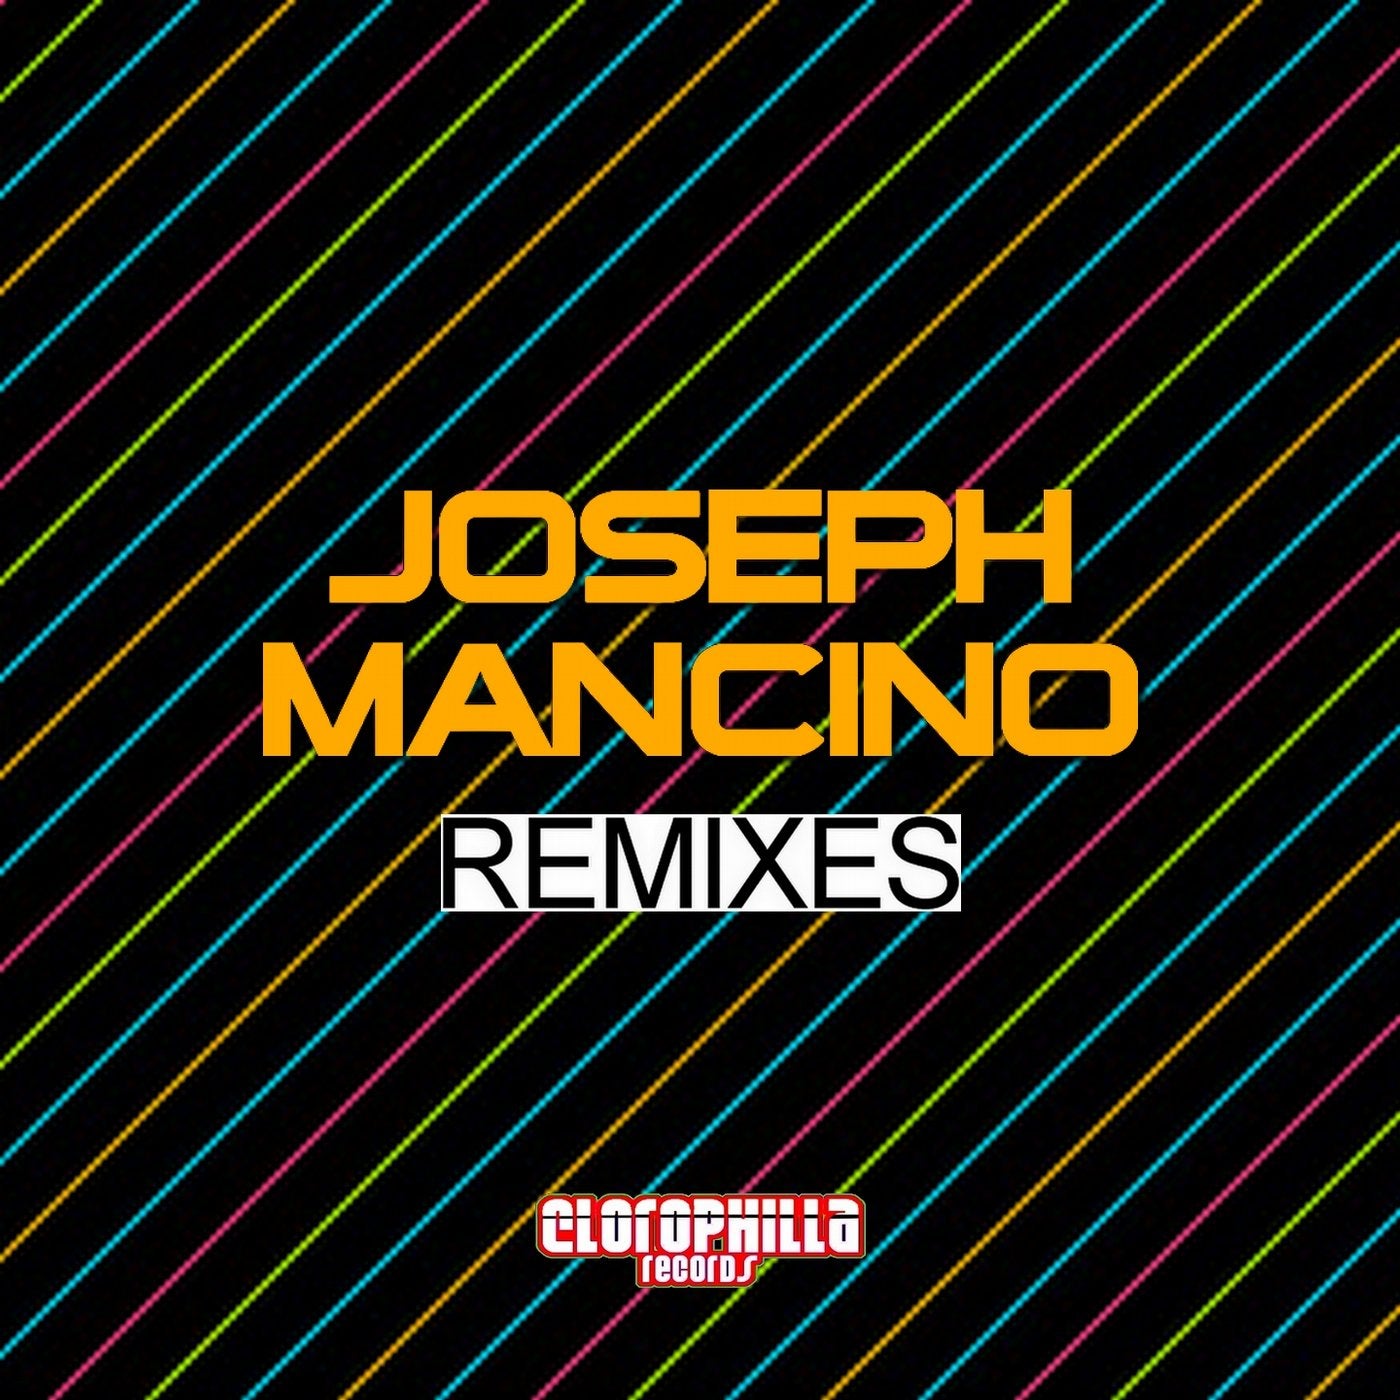 Joseph Mancino Remixes